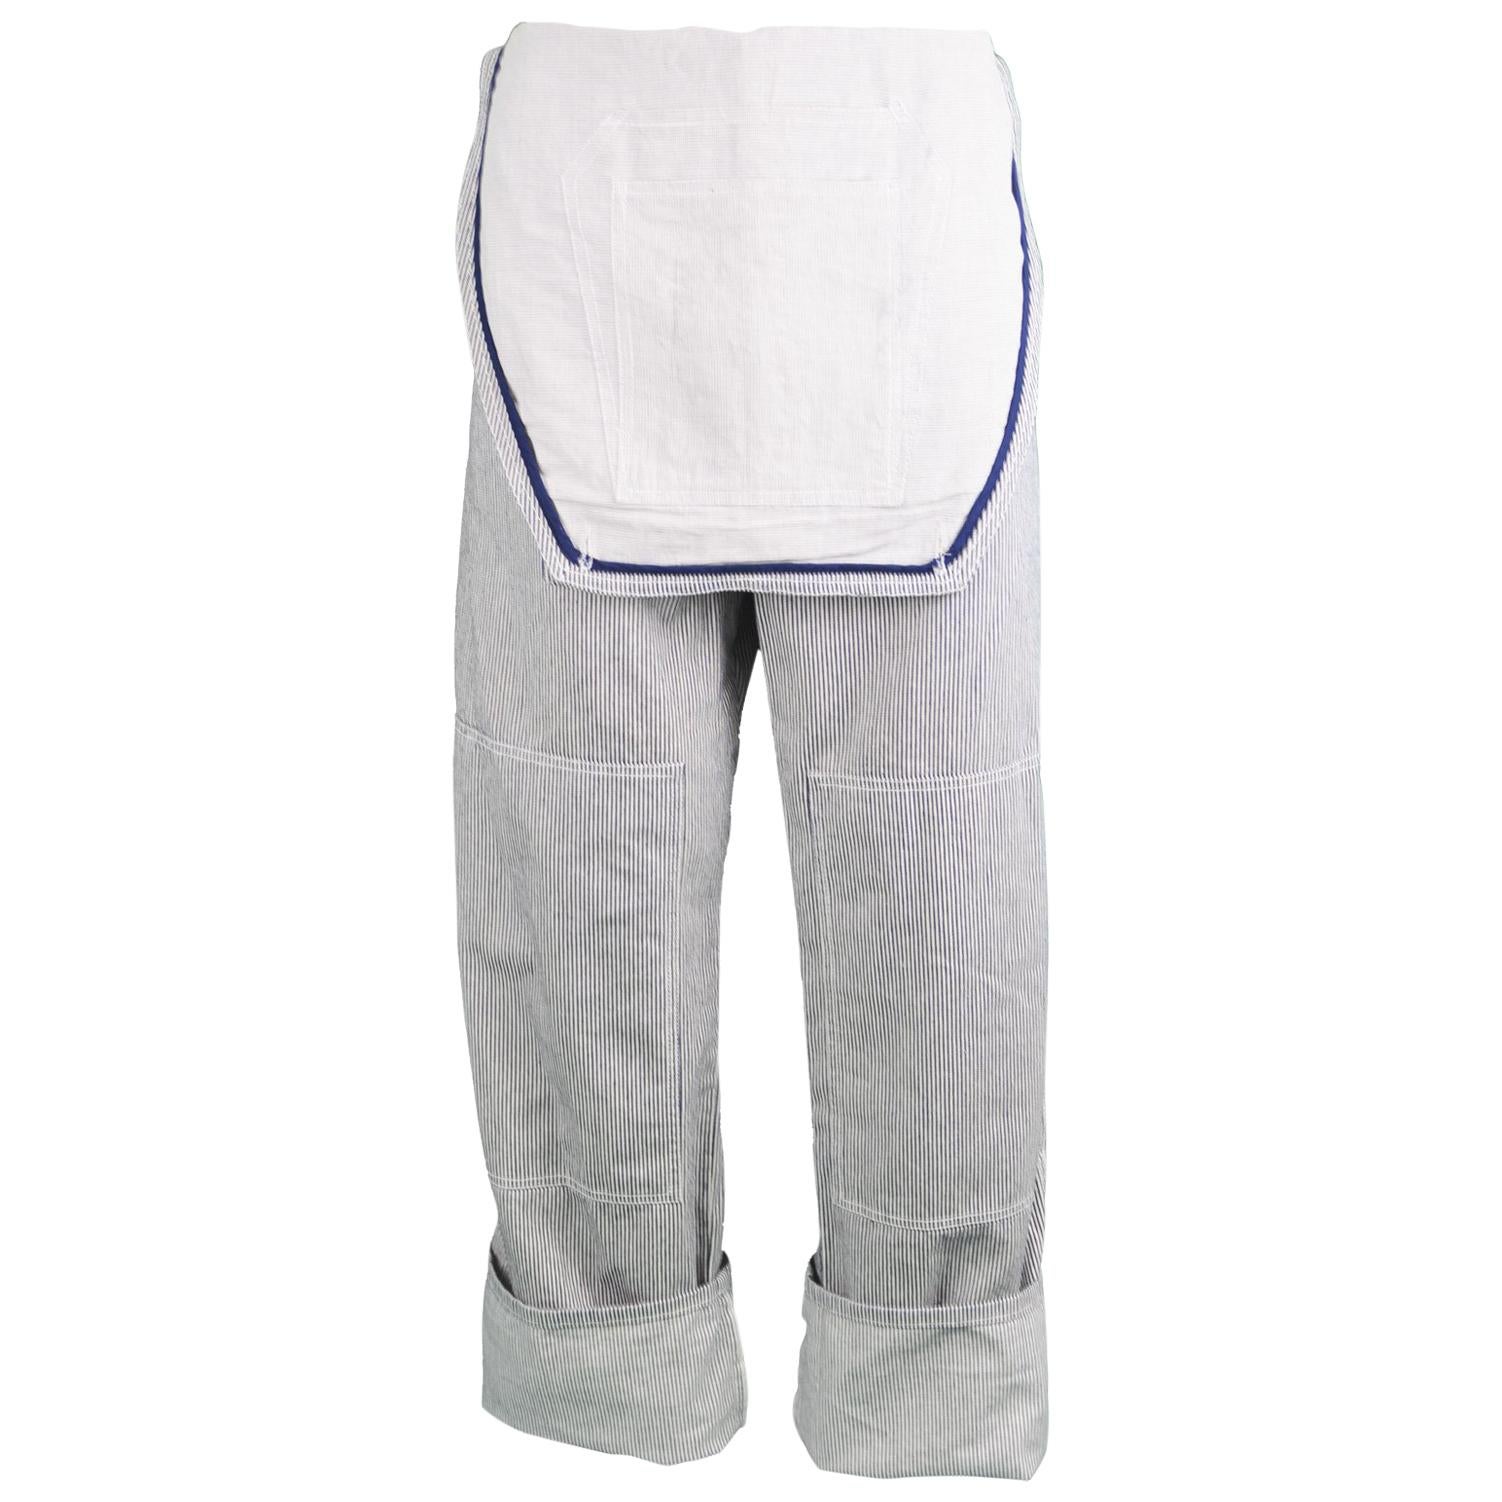 Alexander McQueen Men's Pinstripe Cotton Overall Pants with Bib Front